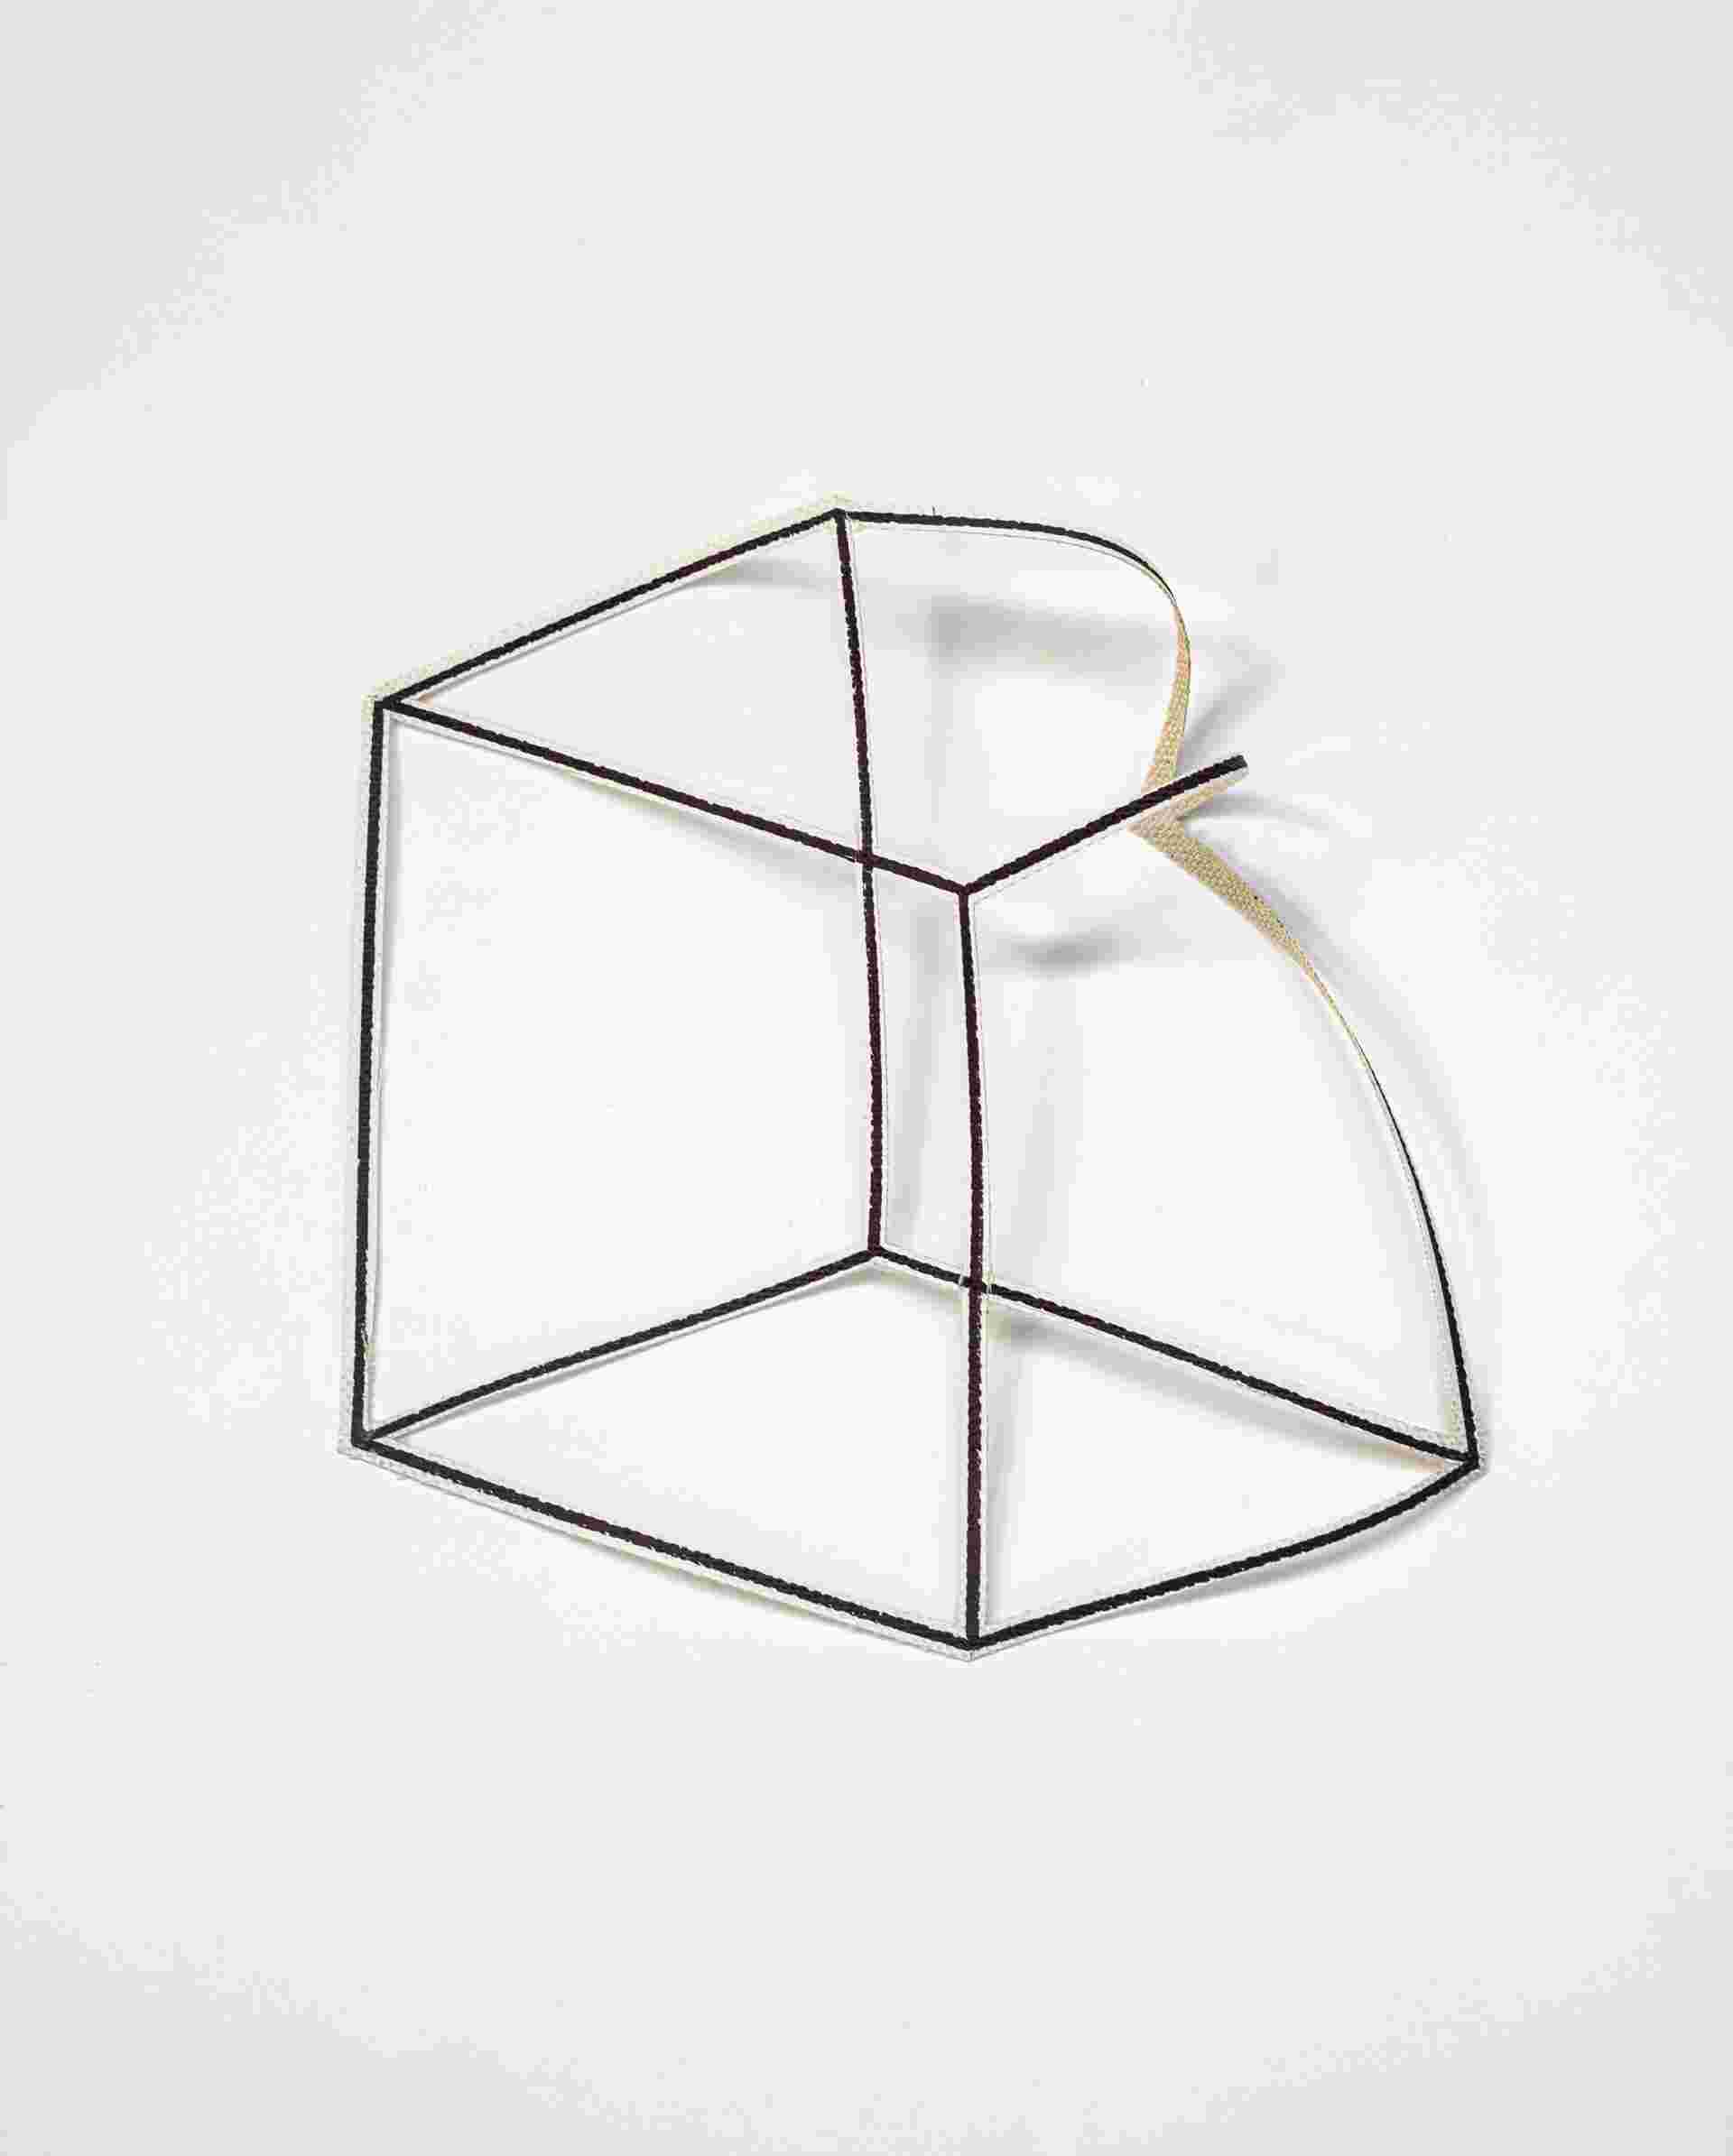 Untitled (Cube) de Joy Walker - FeaturedImage_ArtistBlock